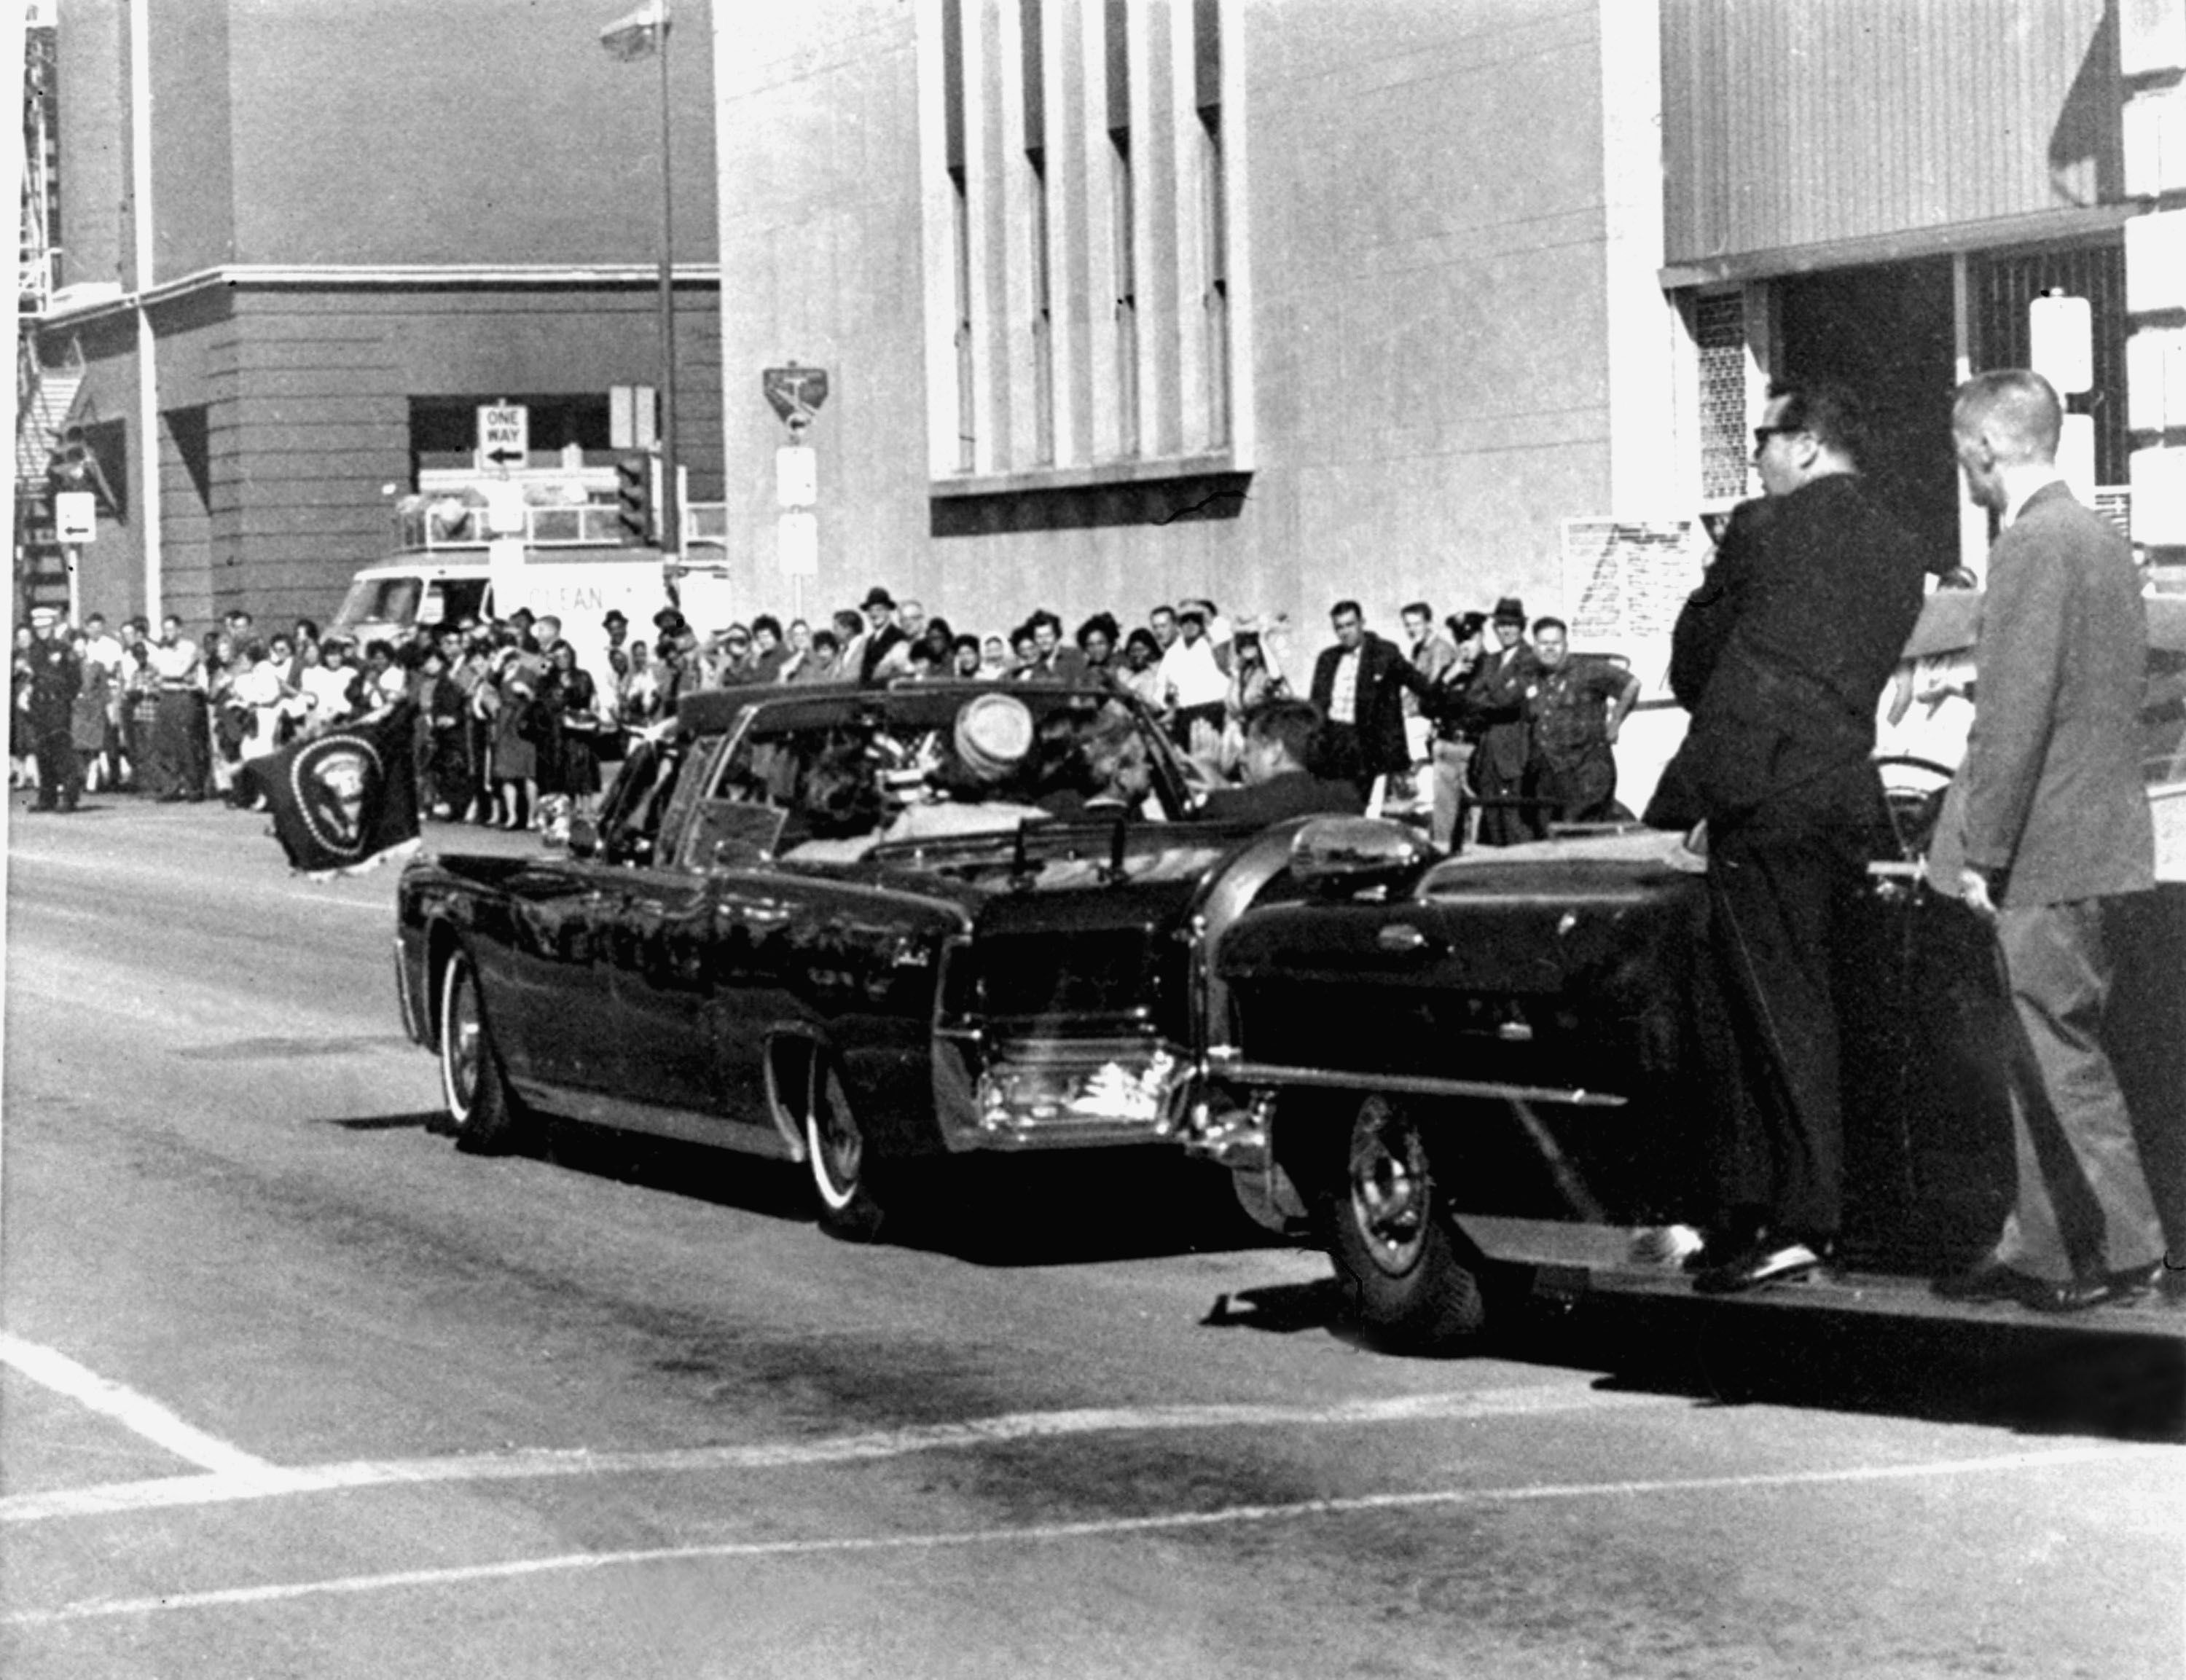 PRESIDENT JOHN F KENNEDY & JACKIE 1963 DALLAS MOTORCADE ASSASSINATION 8X10 PHOTO 